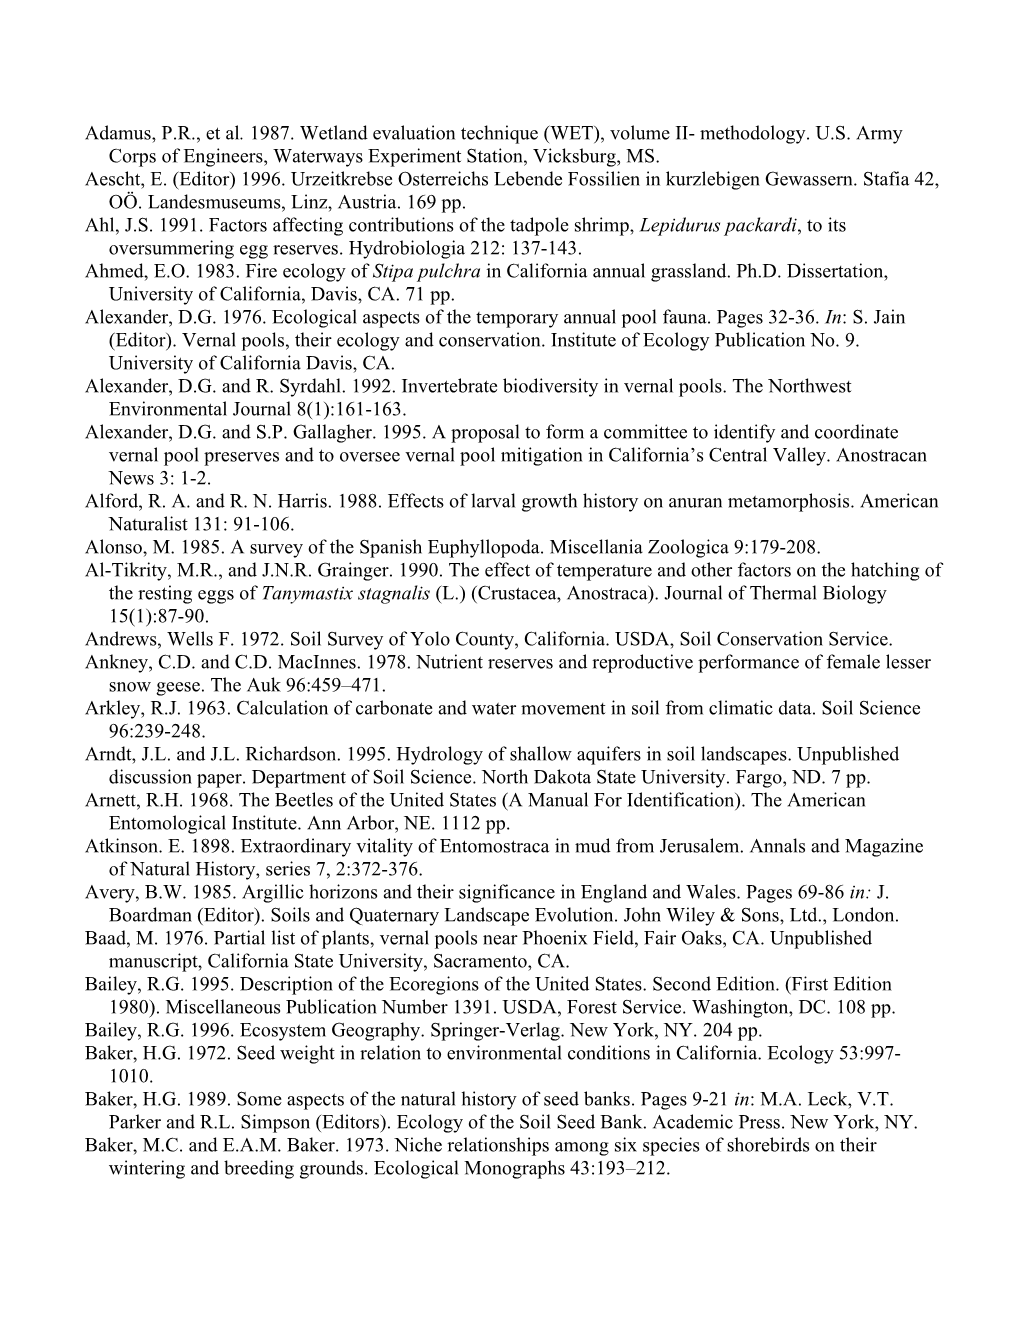 Adamus, P.R., Et Al. 1987. Wetland Evaluation Technique (WET), Volume II- Methodology